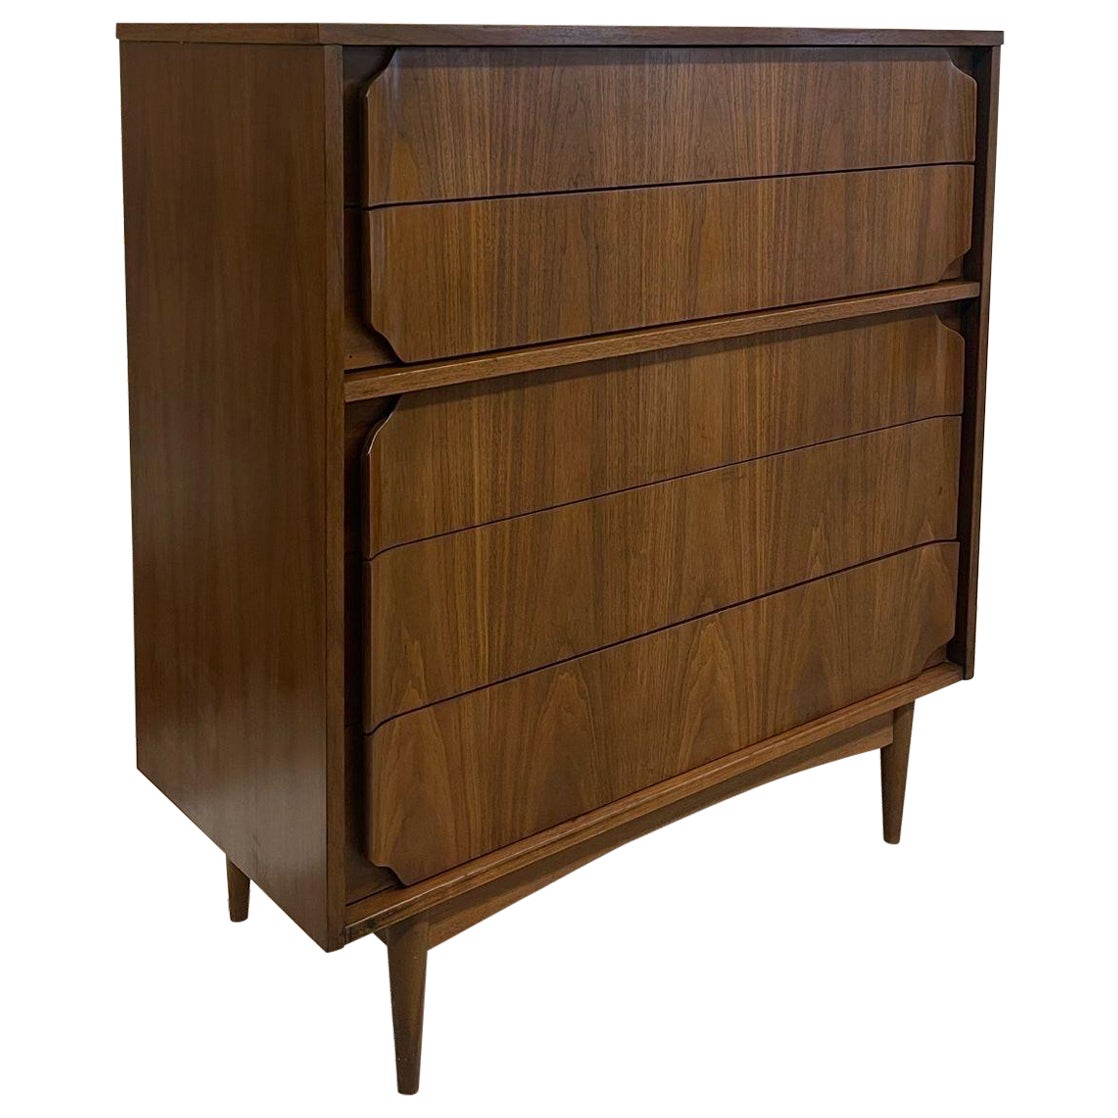 Vintage Mid Century Modern Dresser With Wood Carved Handles.